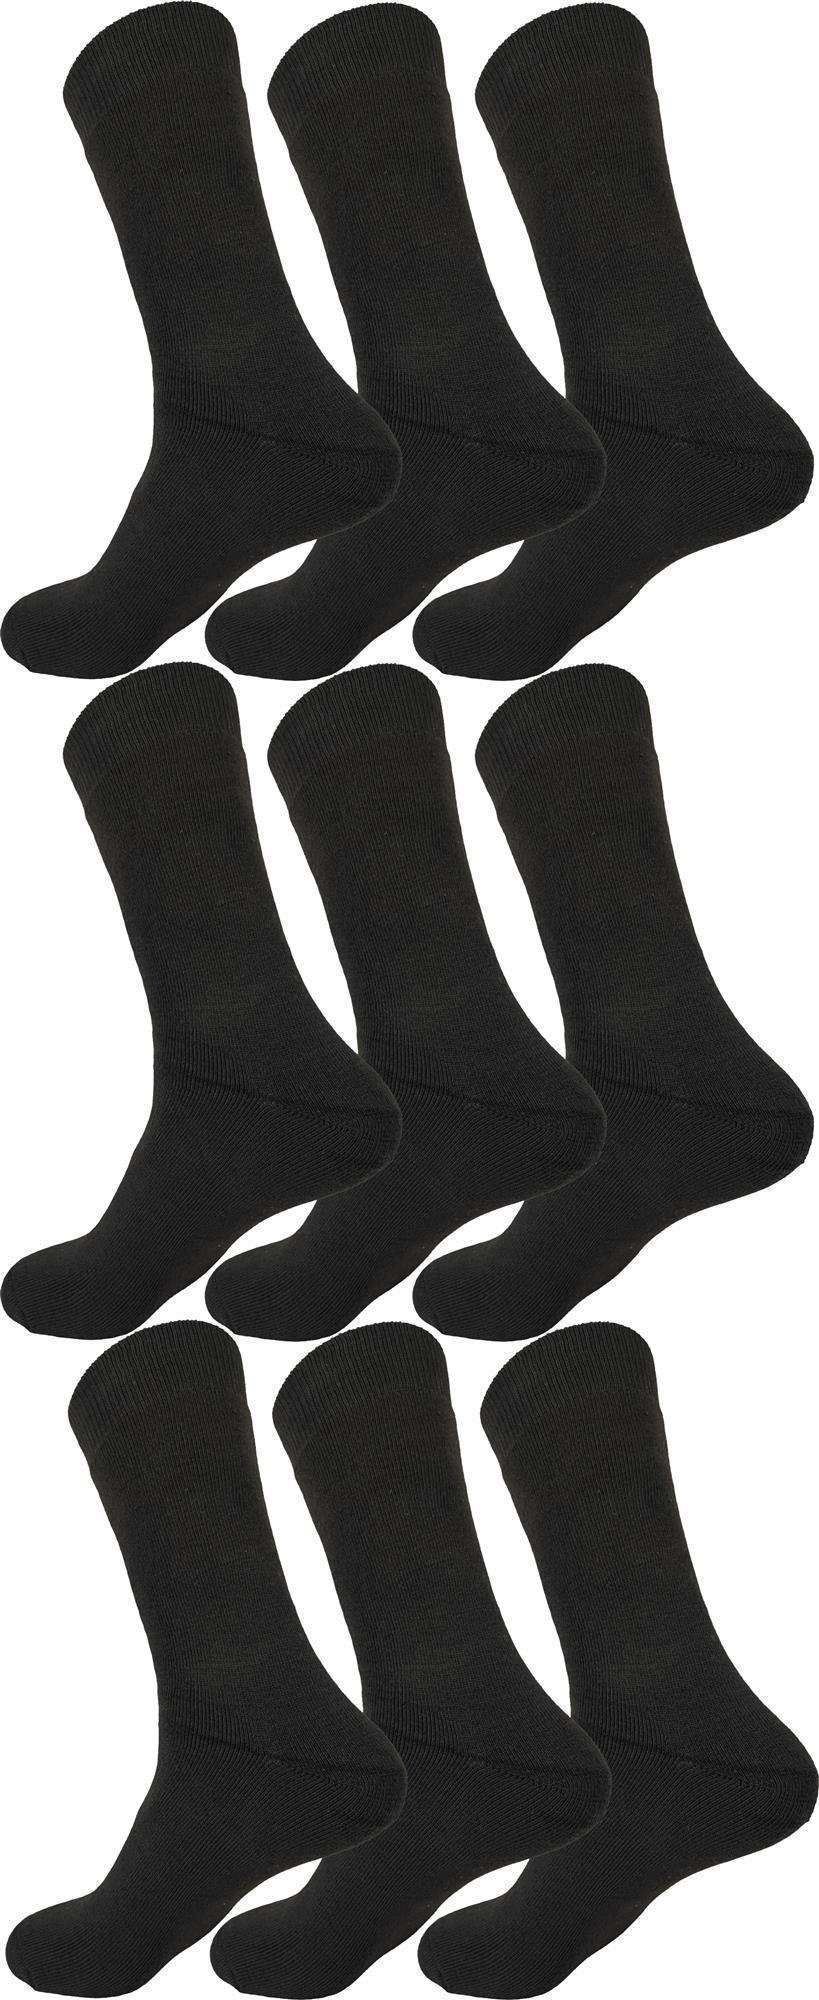 Baumwolle; 12 12 43-46 39-42 Winter Socken Paar Schwarz Thermo Paar, Warm Thermosocken (12-Paar) Vollfrottee EloModa